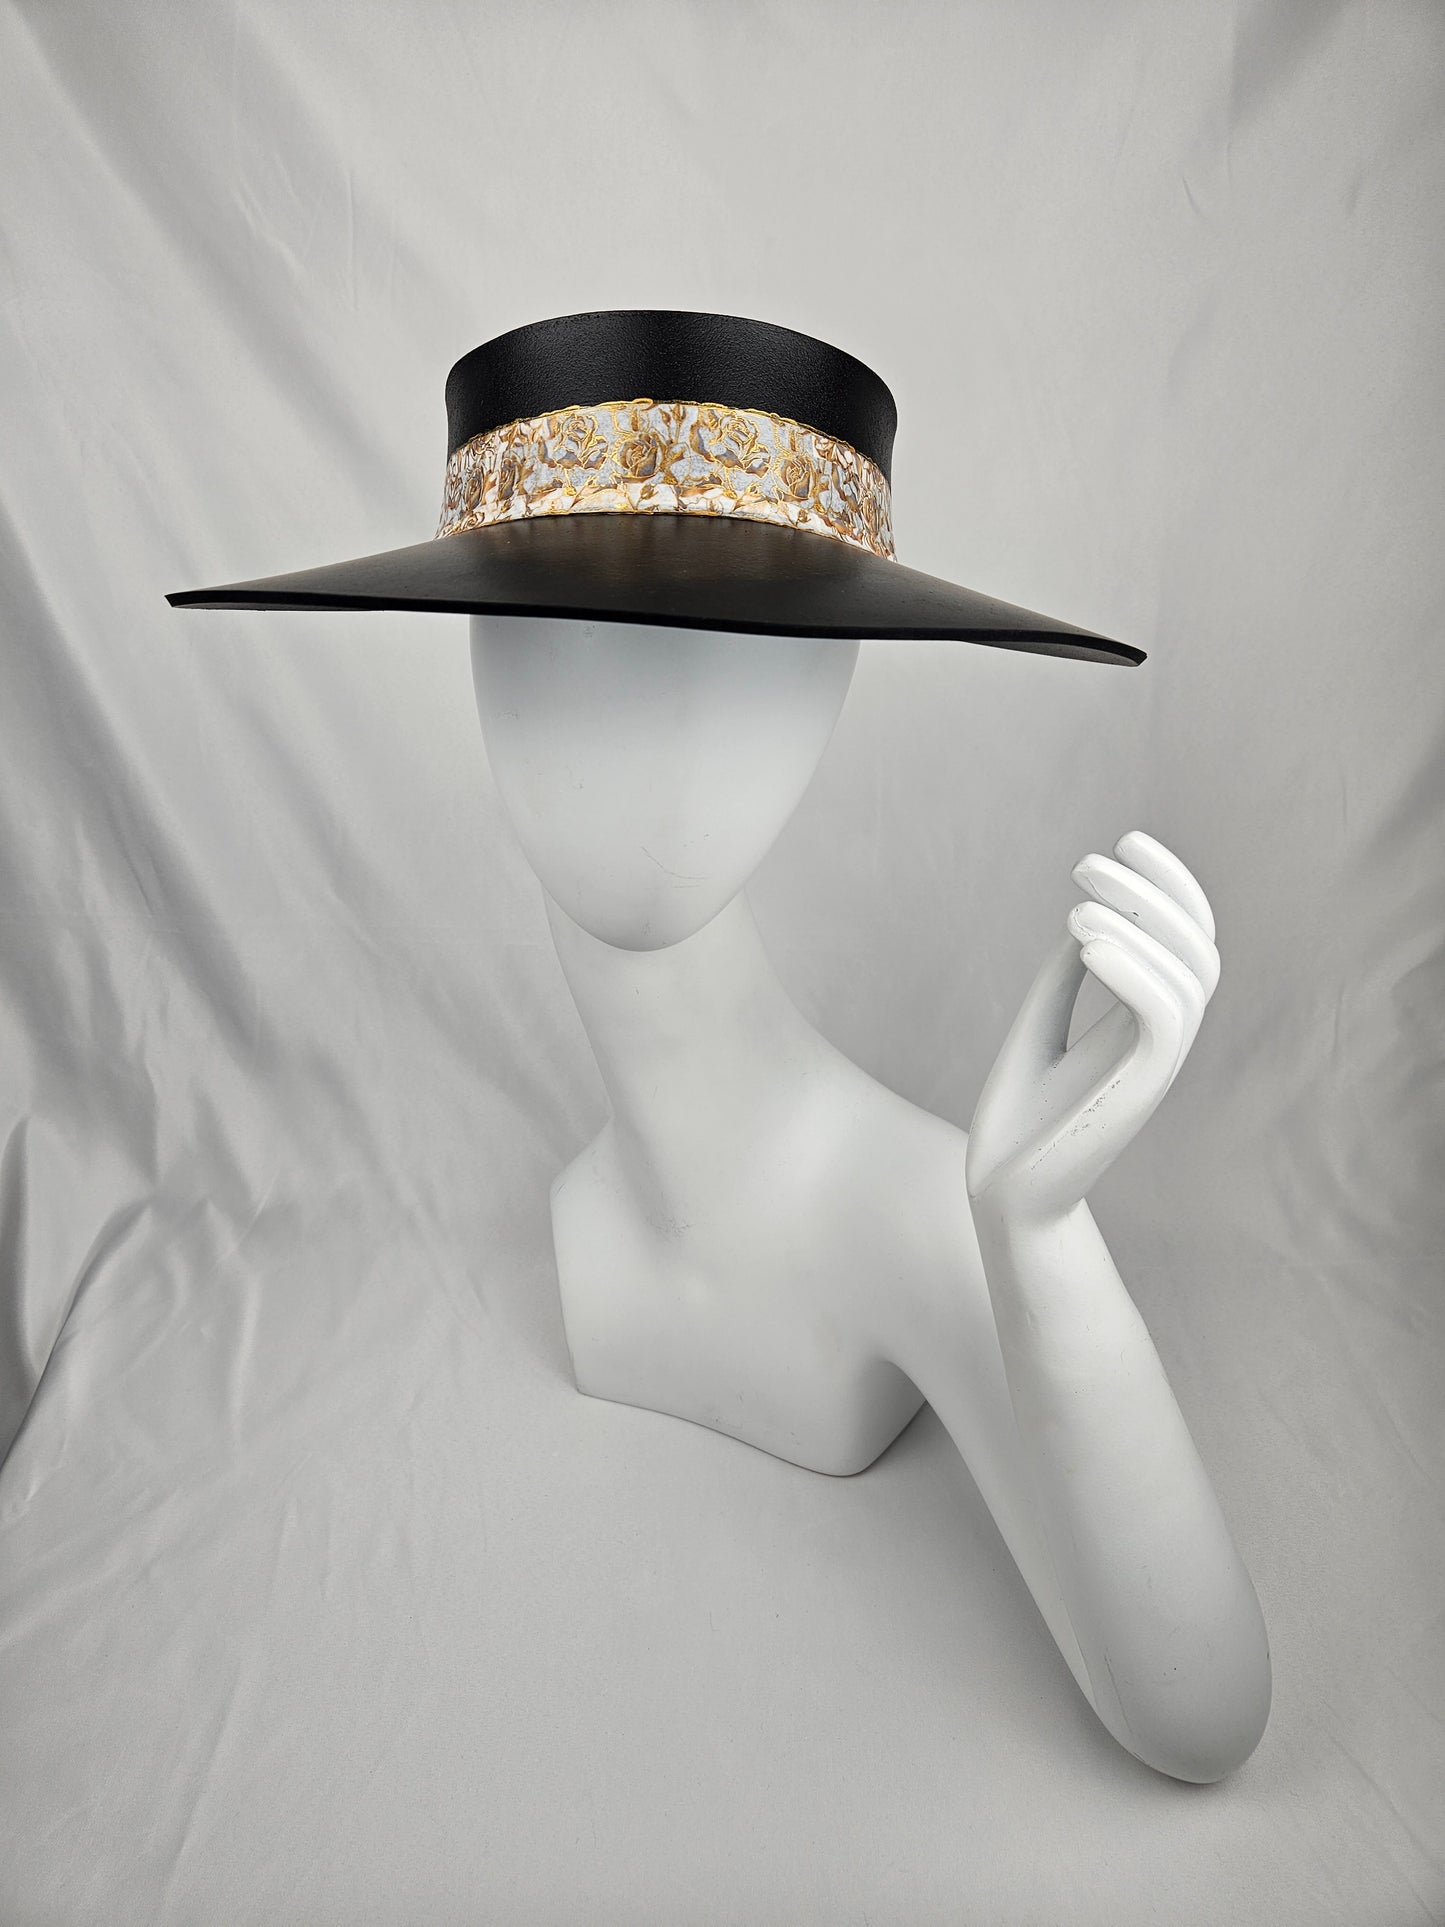 Timeless Black Audrey Foam Sun Visor Hat with Golden Floral Band: Big Brim, Swim, Pool, UV Resistant, No Headache